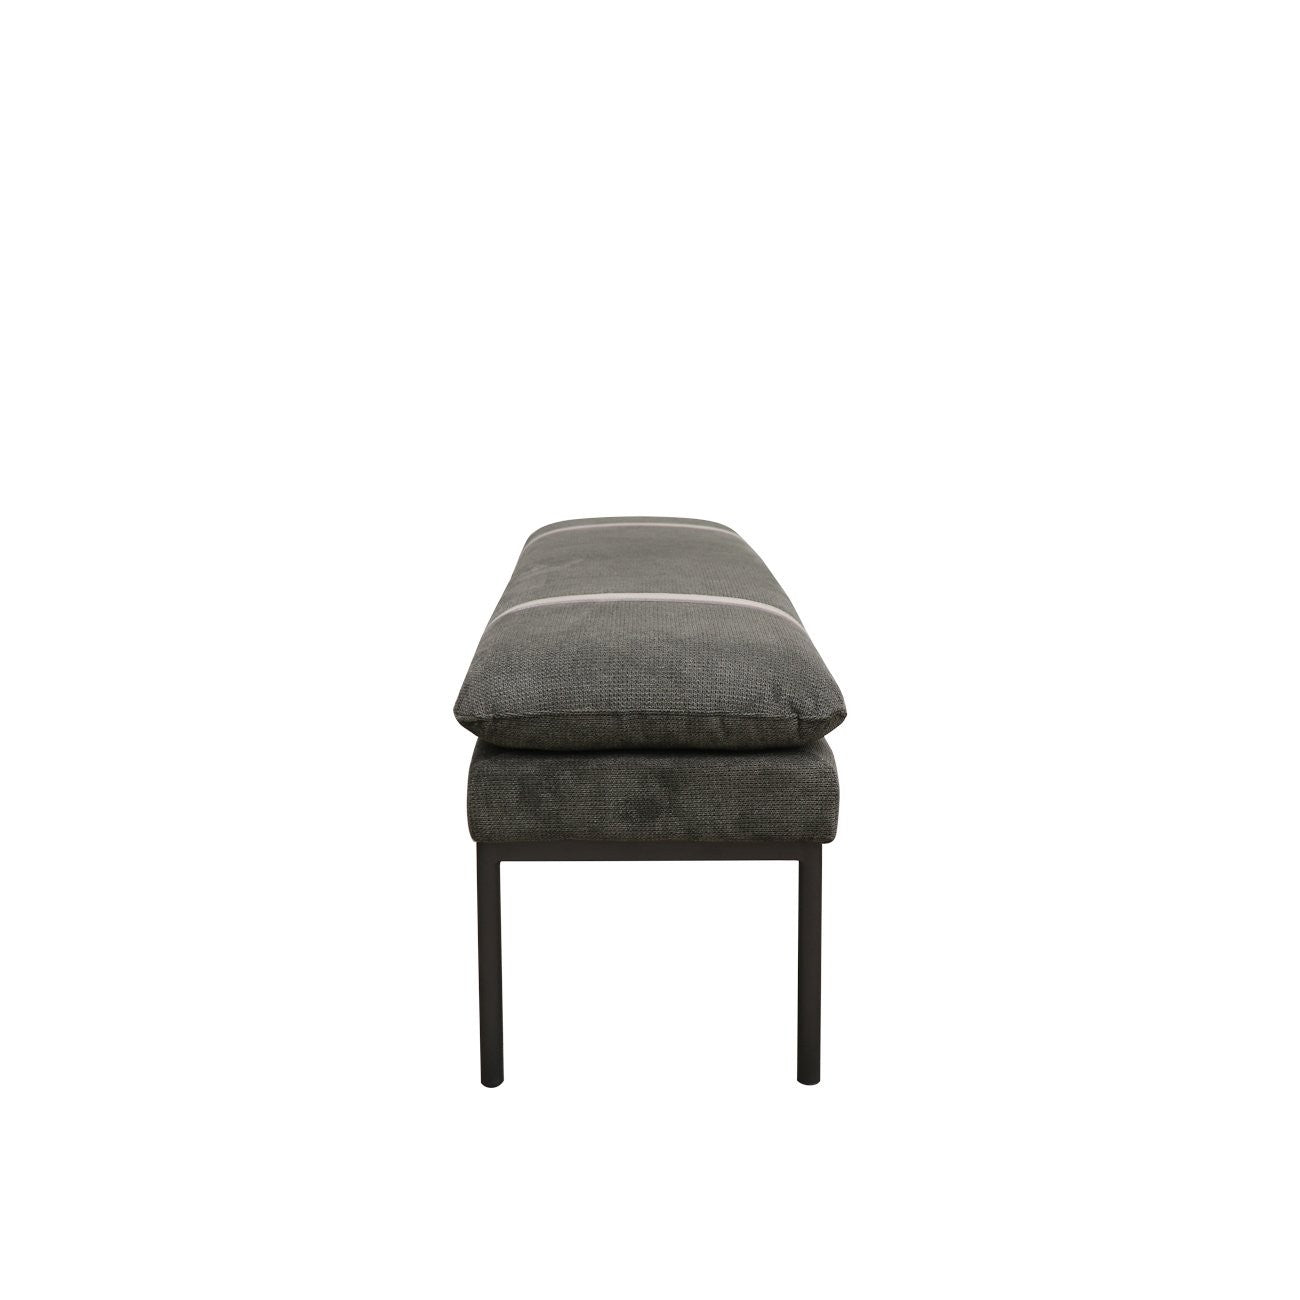 Baxter Ottoman/Bench Seat - Charcoal